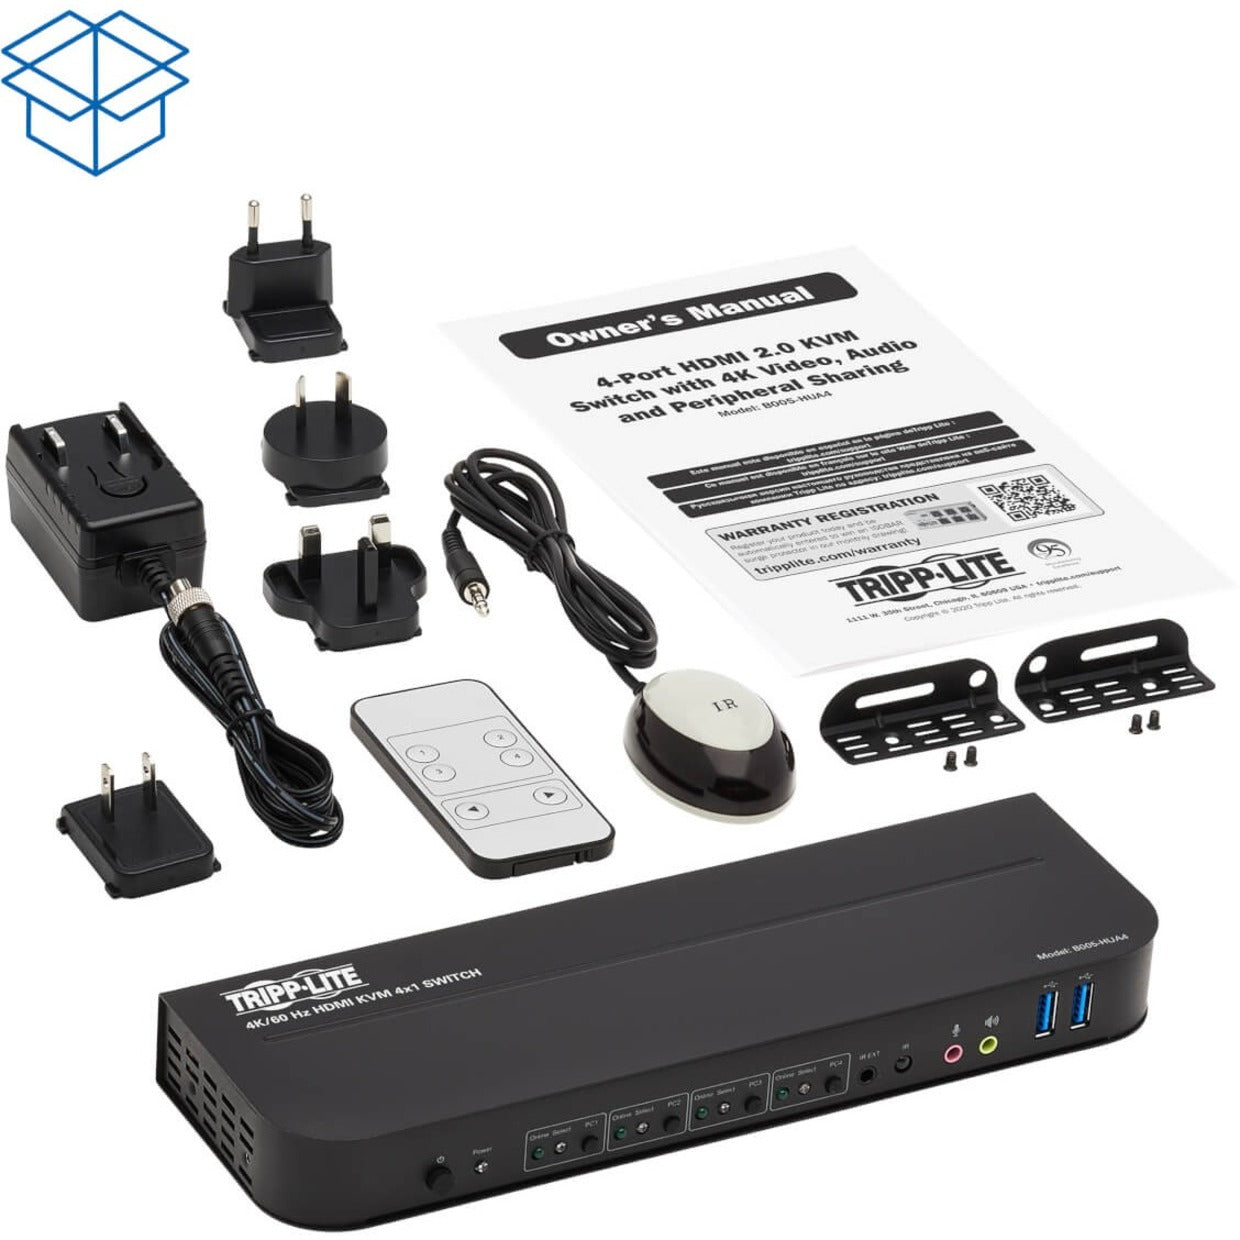 Tripp Lite B005-HUA4 4-Port HDMI/USB KVM Switch 4096 x 2160 Résolution 3-Year Garantie